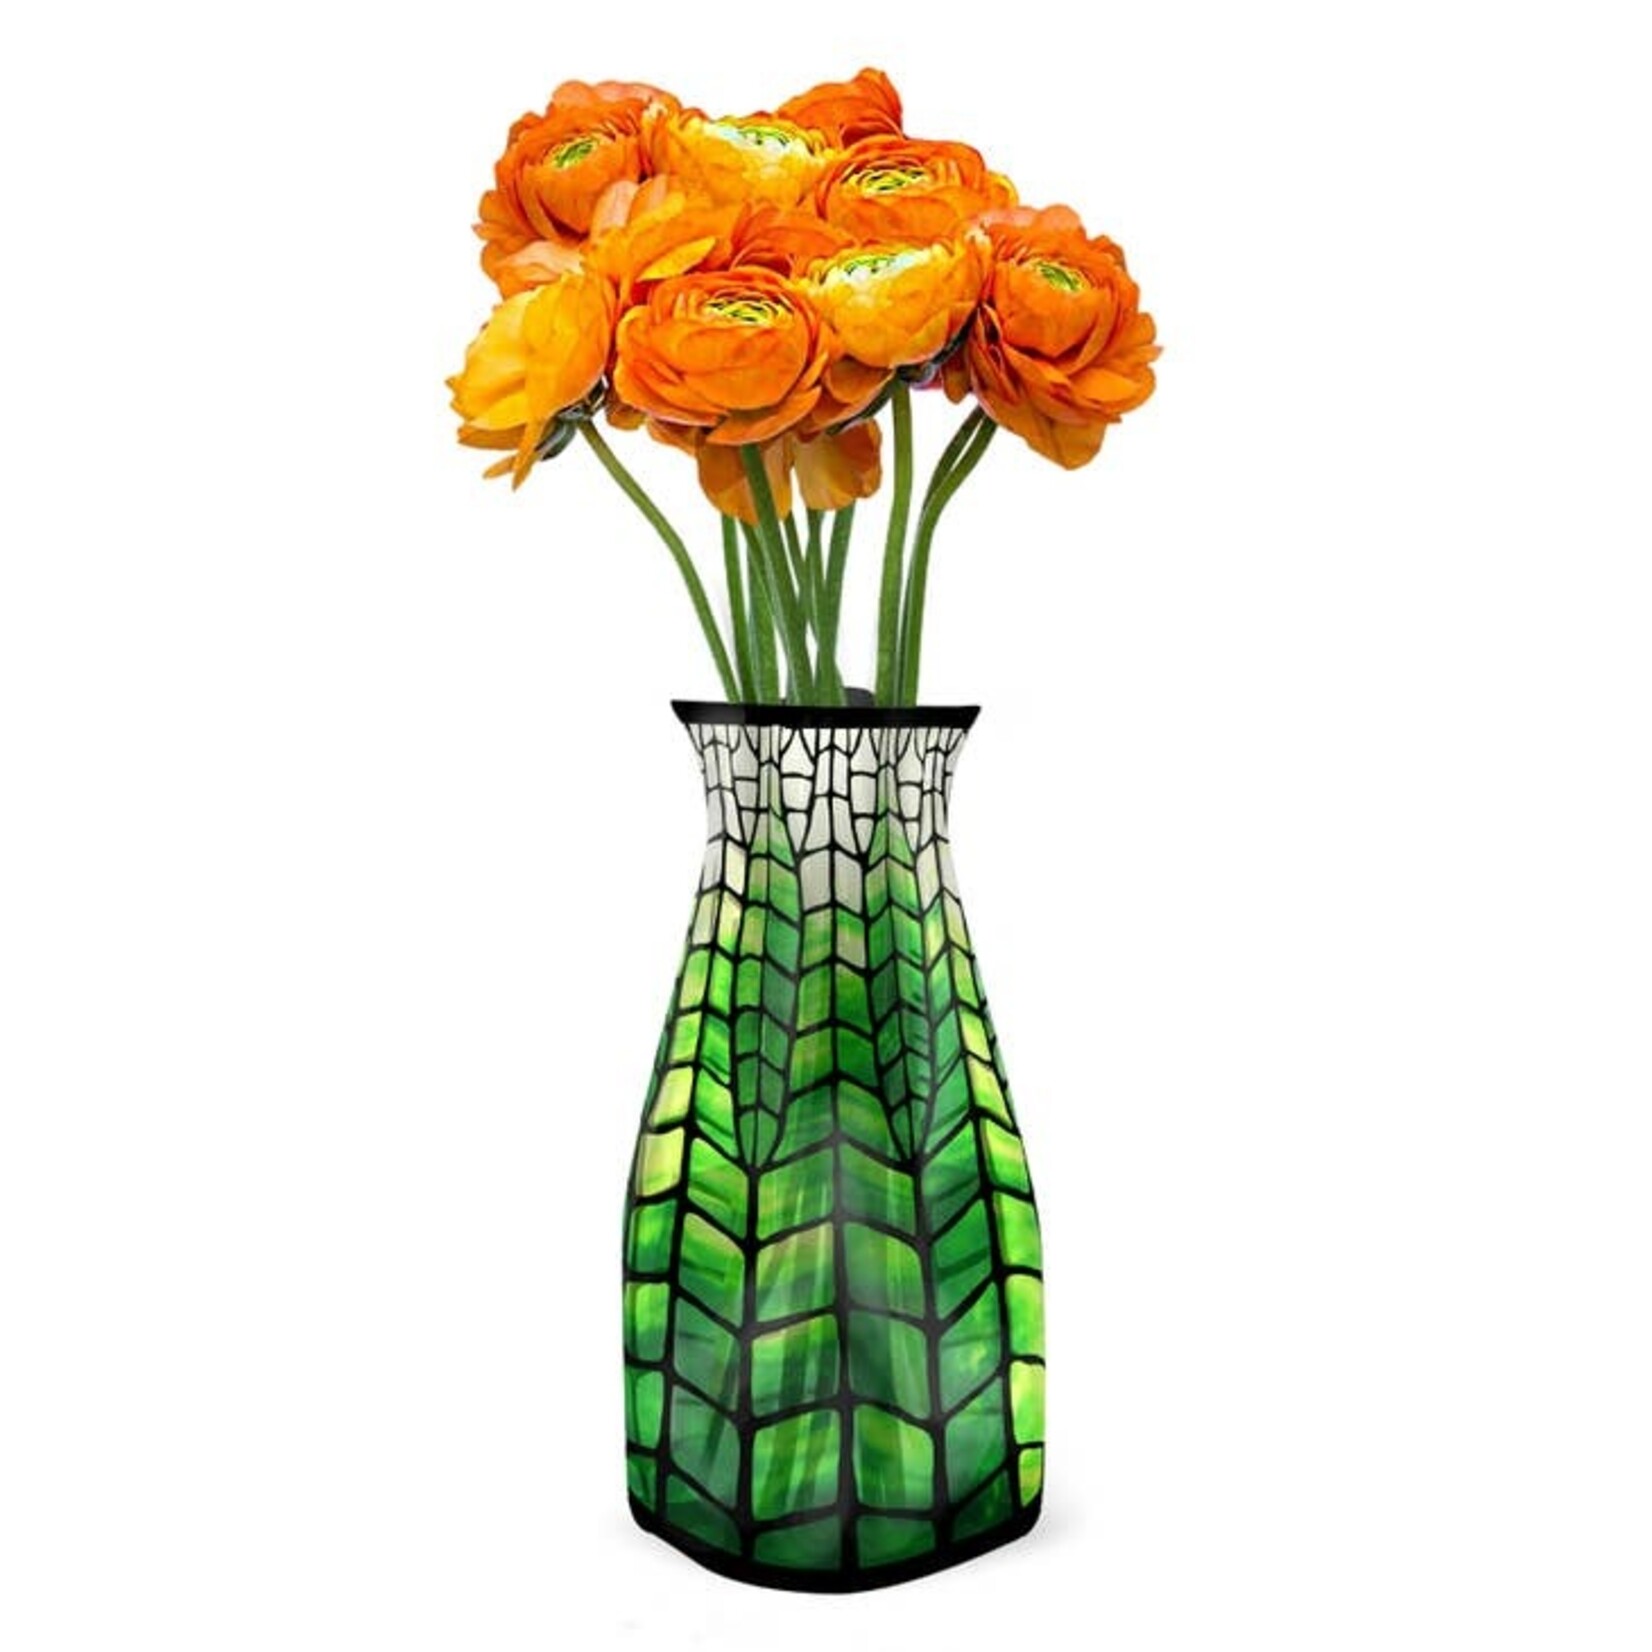 Modgy Louis C. Tiffany Lotus Pagoda Modgy Vase